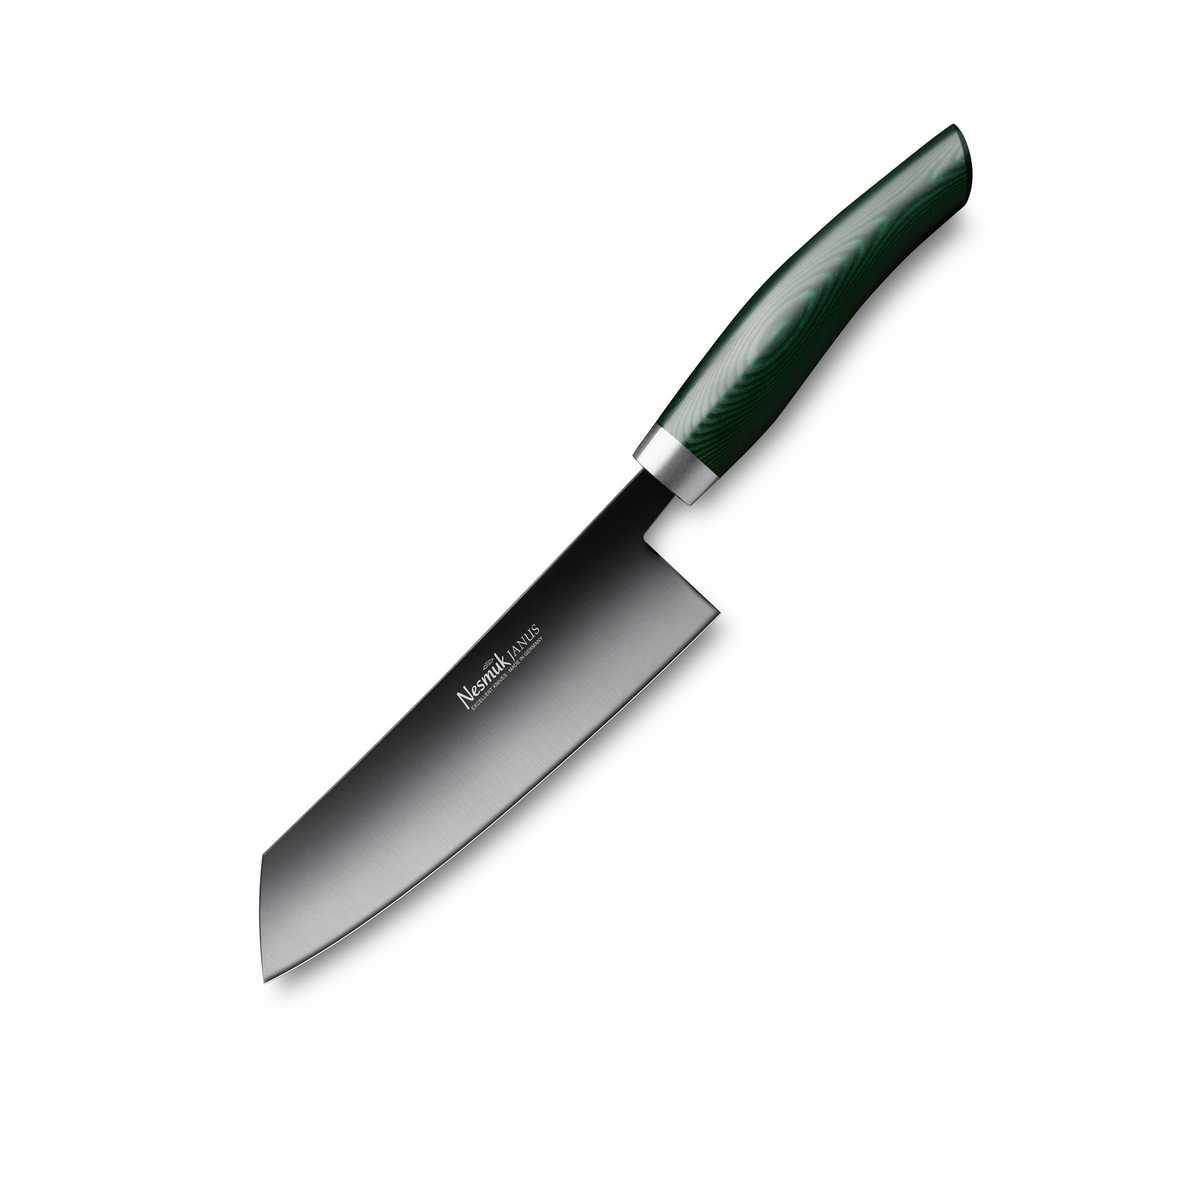 Nesmuk Janus Kochmesser 14 cm - Niobstahl mit DLC-Beschichtung - Griff Micarta grün